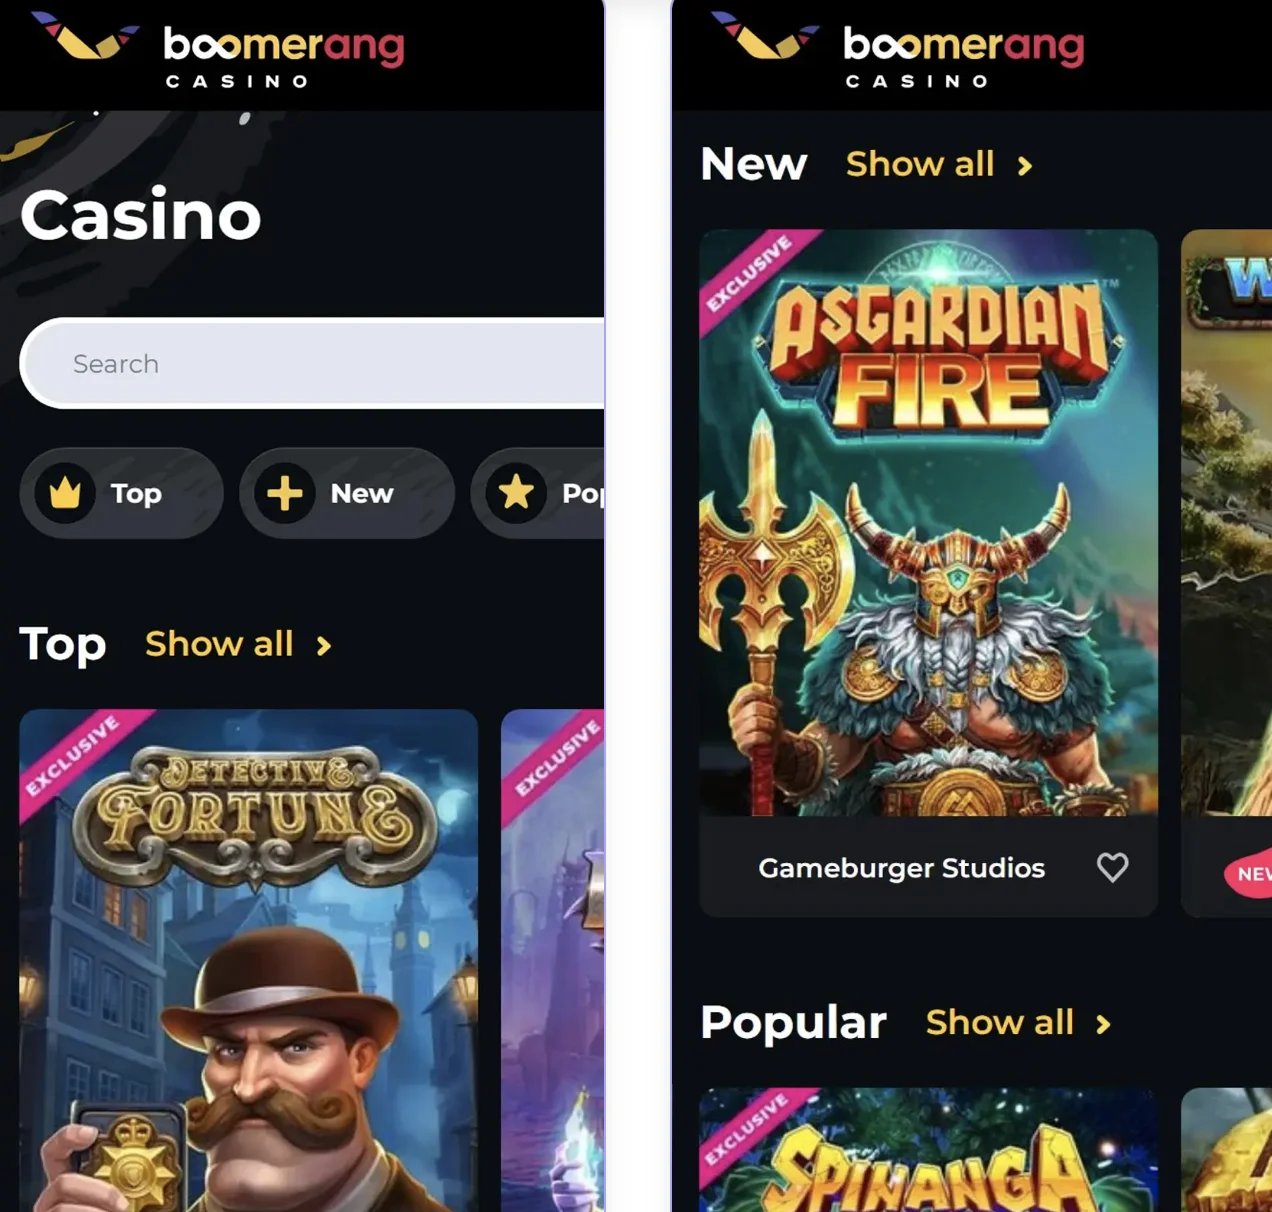 Boomerang Casino Mobile Casino and App